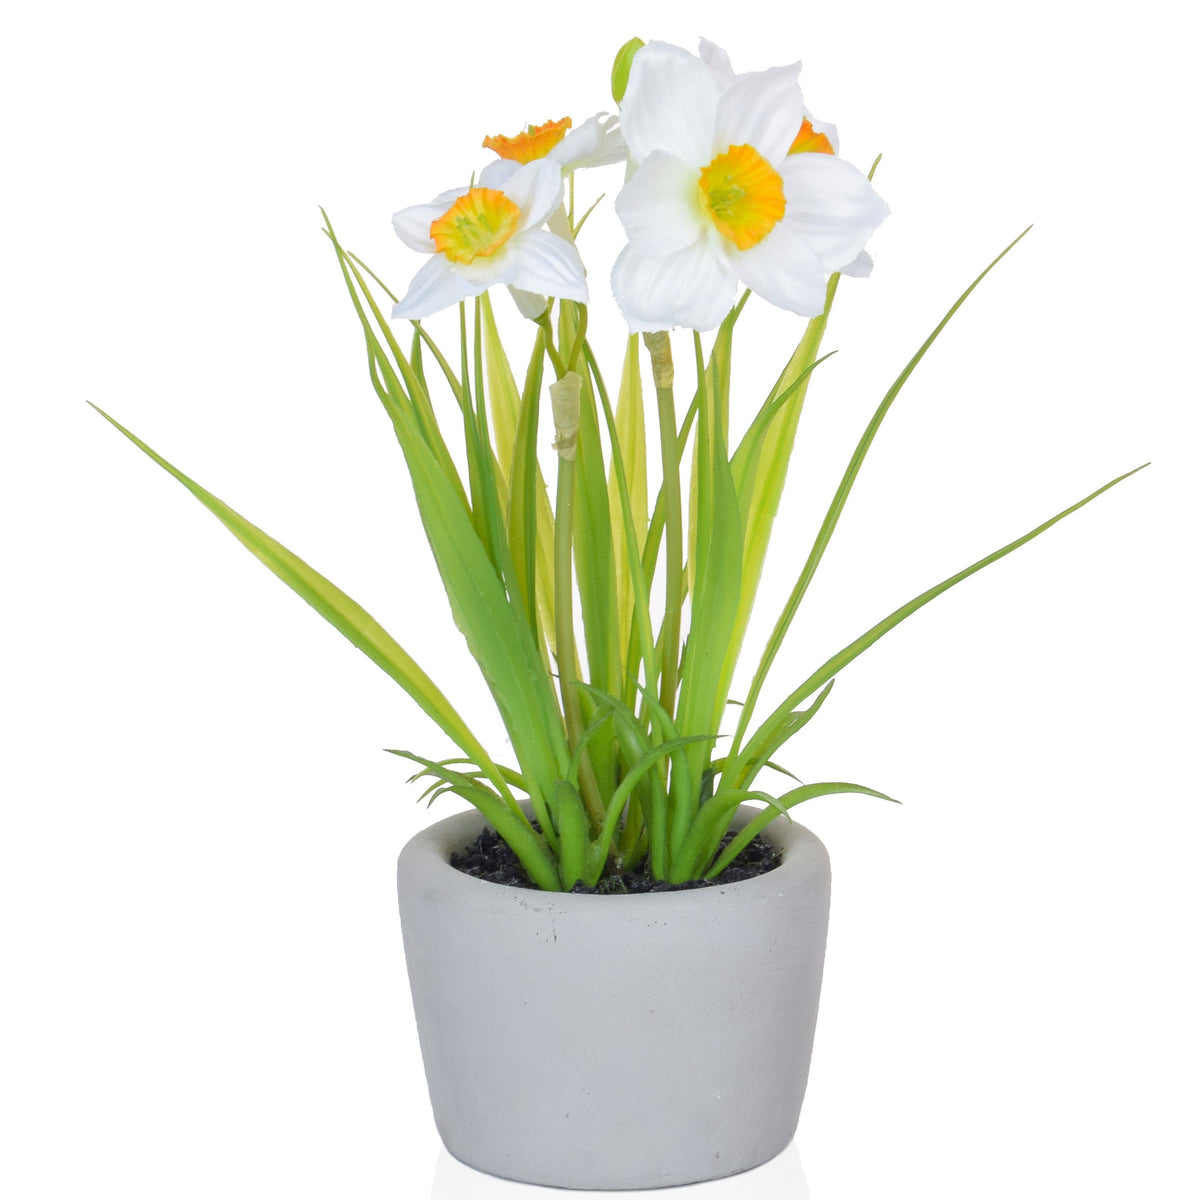 Faux daffodils in a pot